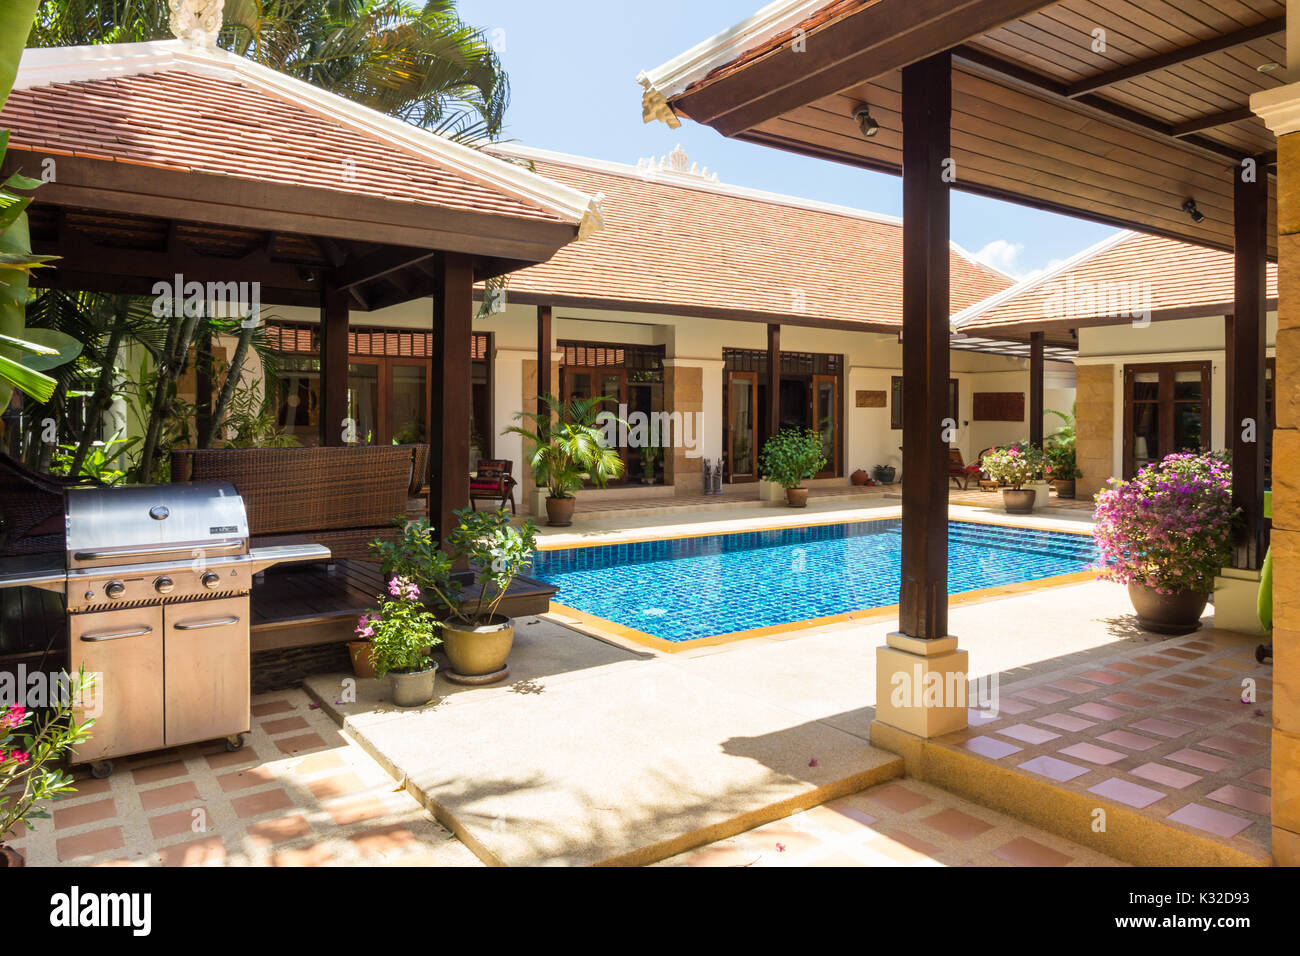 Villa with swimming pool,sala and barbecue, Phuket,Thailand Stock Photo